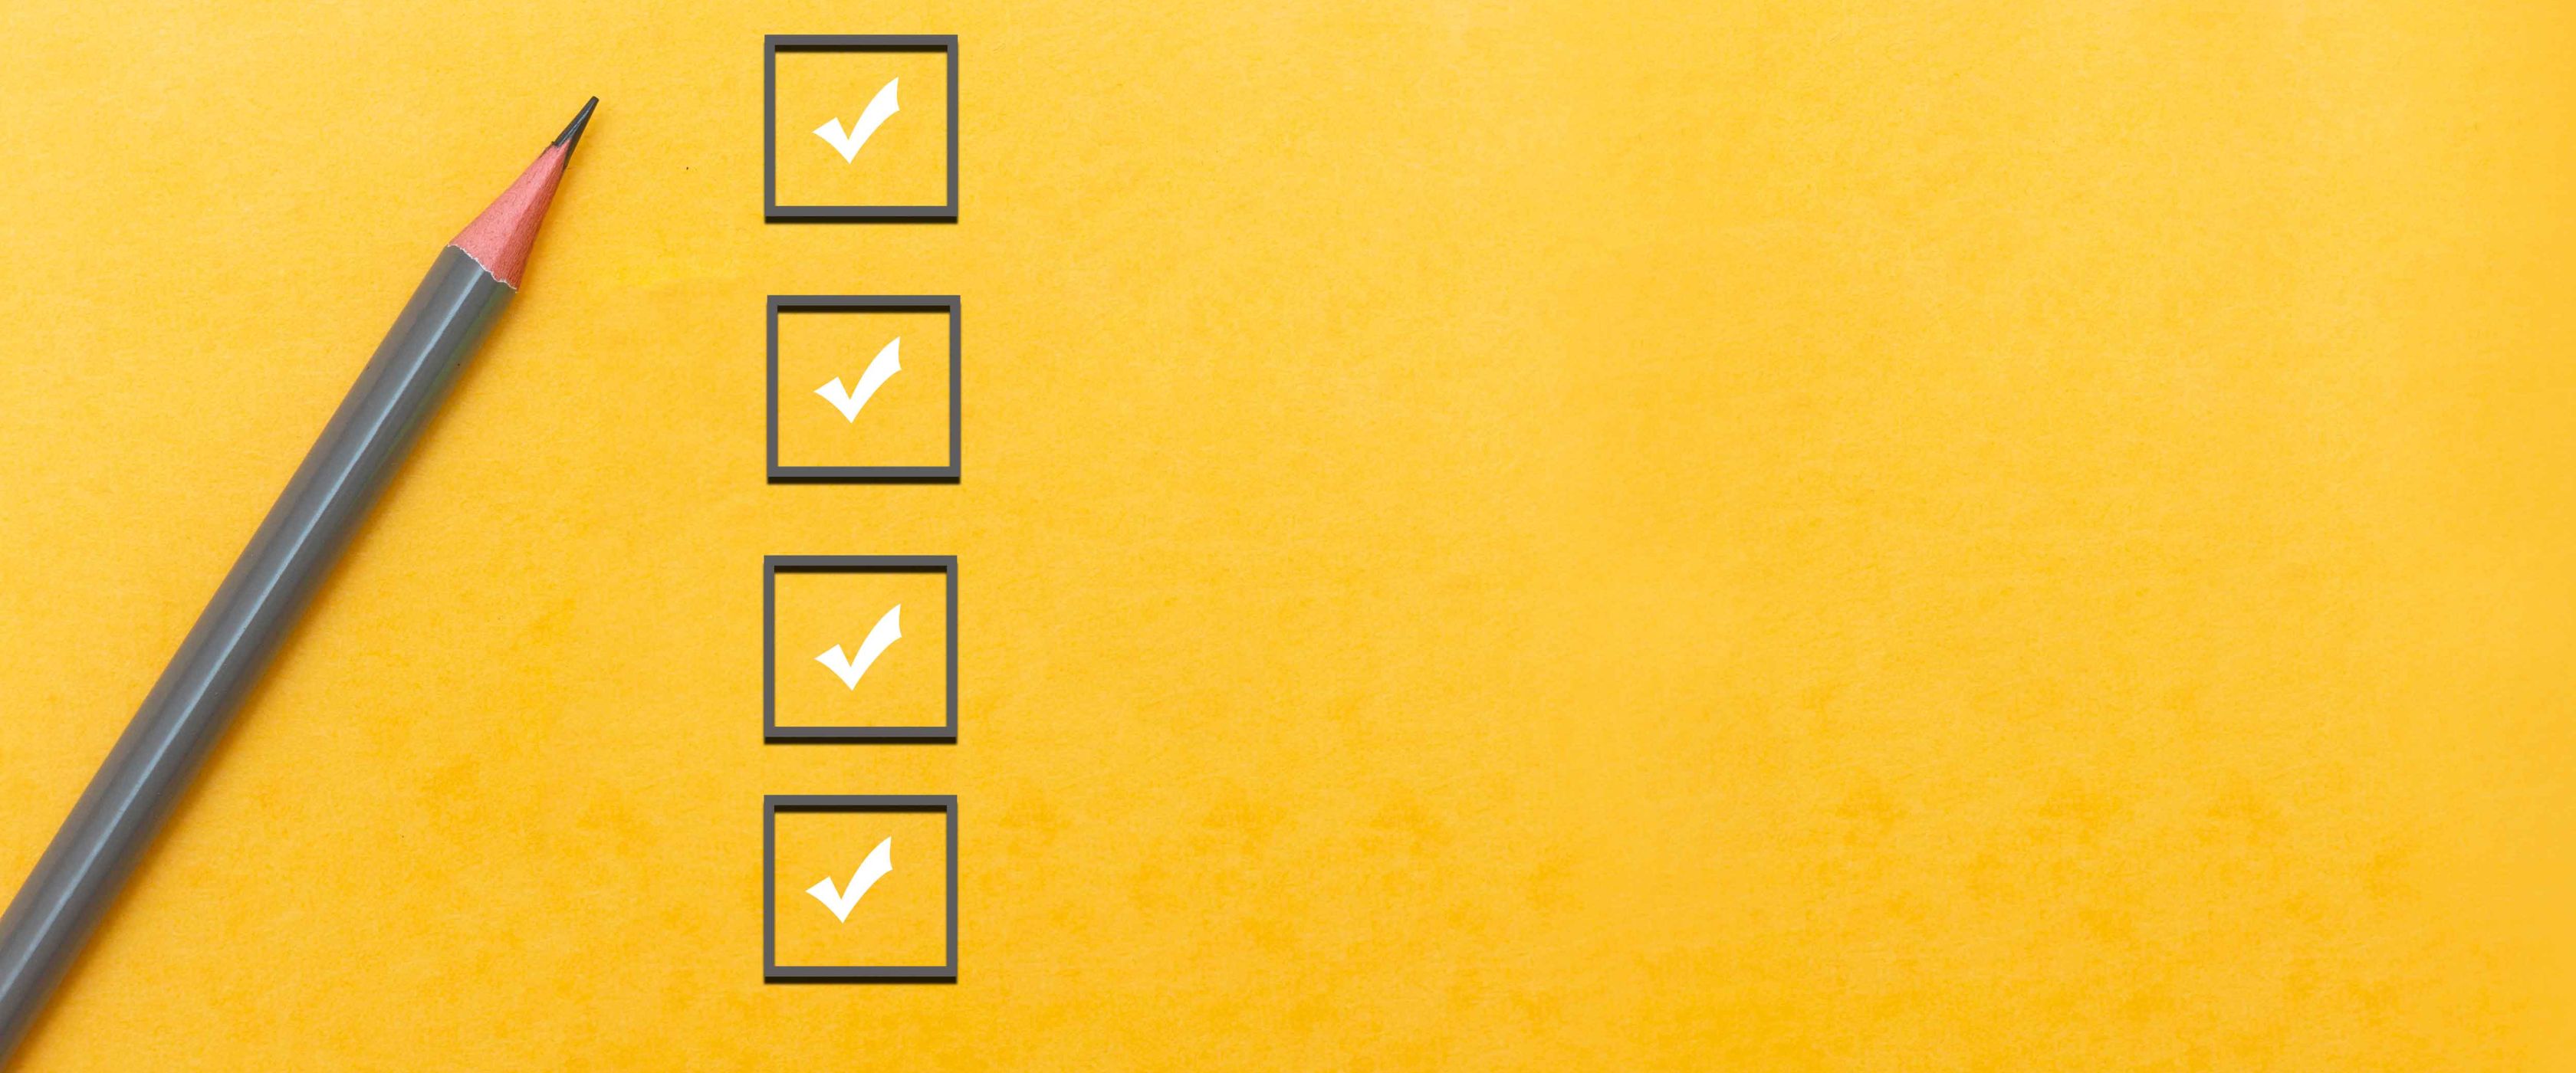 Checklist on yellow background